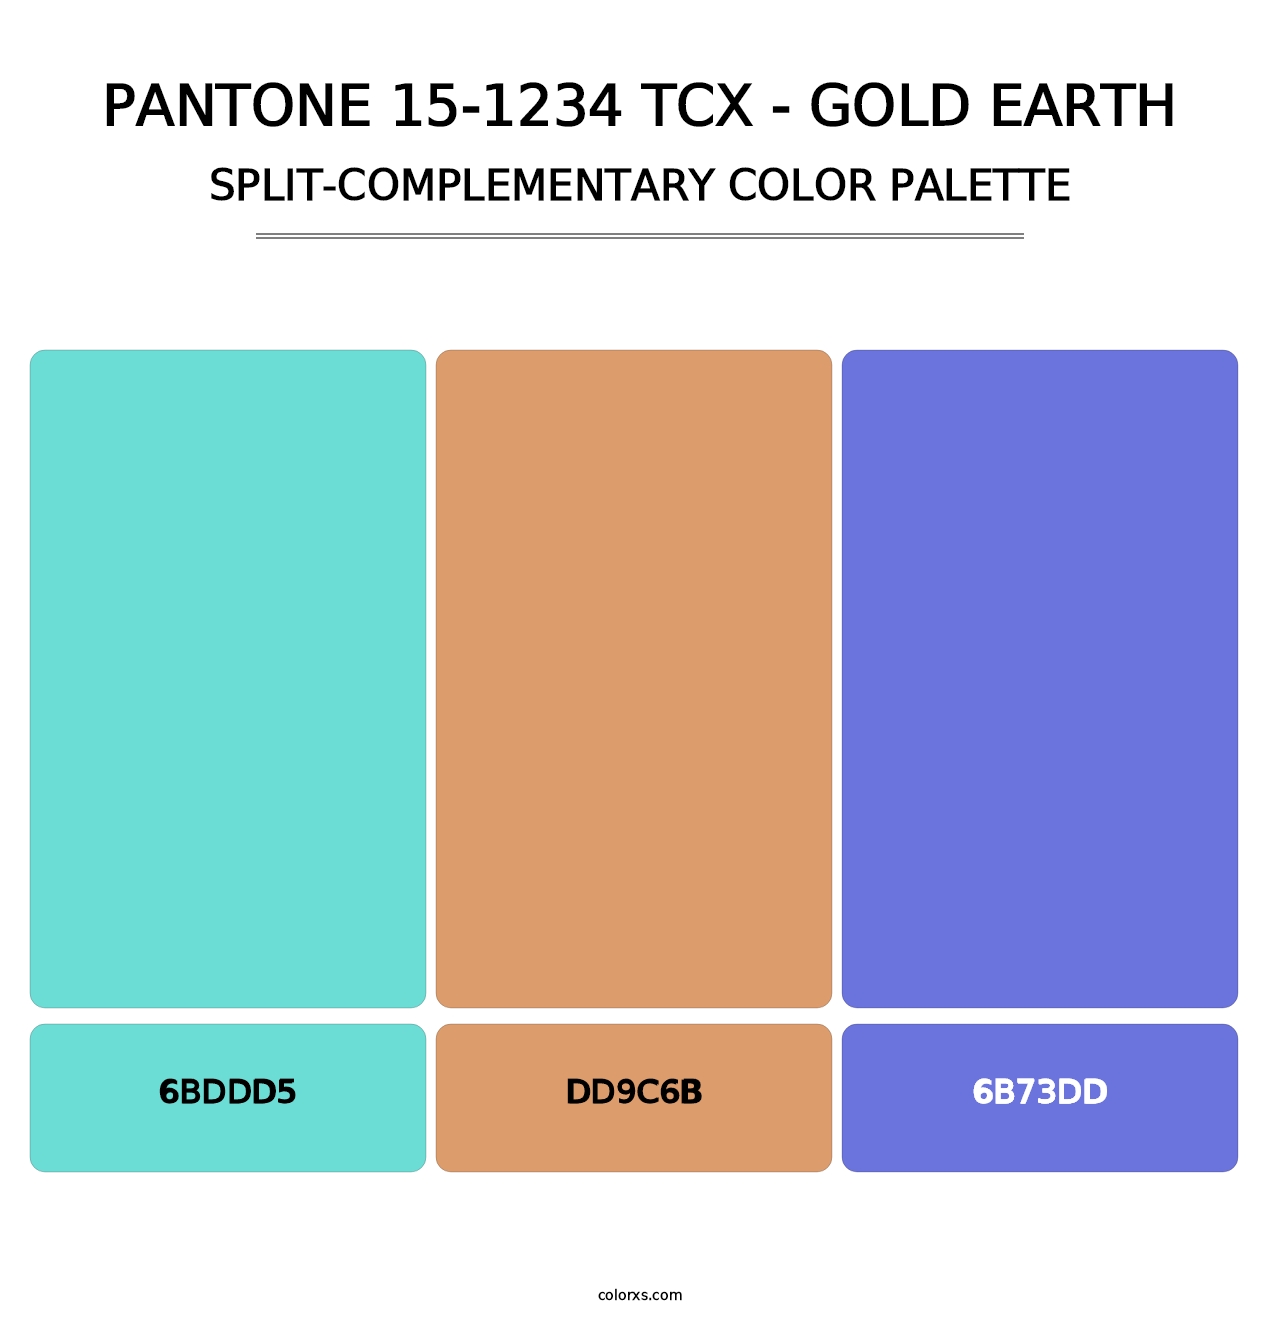 PANTONE 15-1234 TCX - Gold Earth - Split-Complementary Color Palette